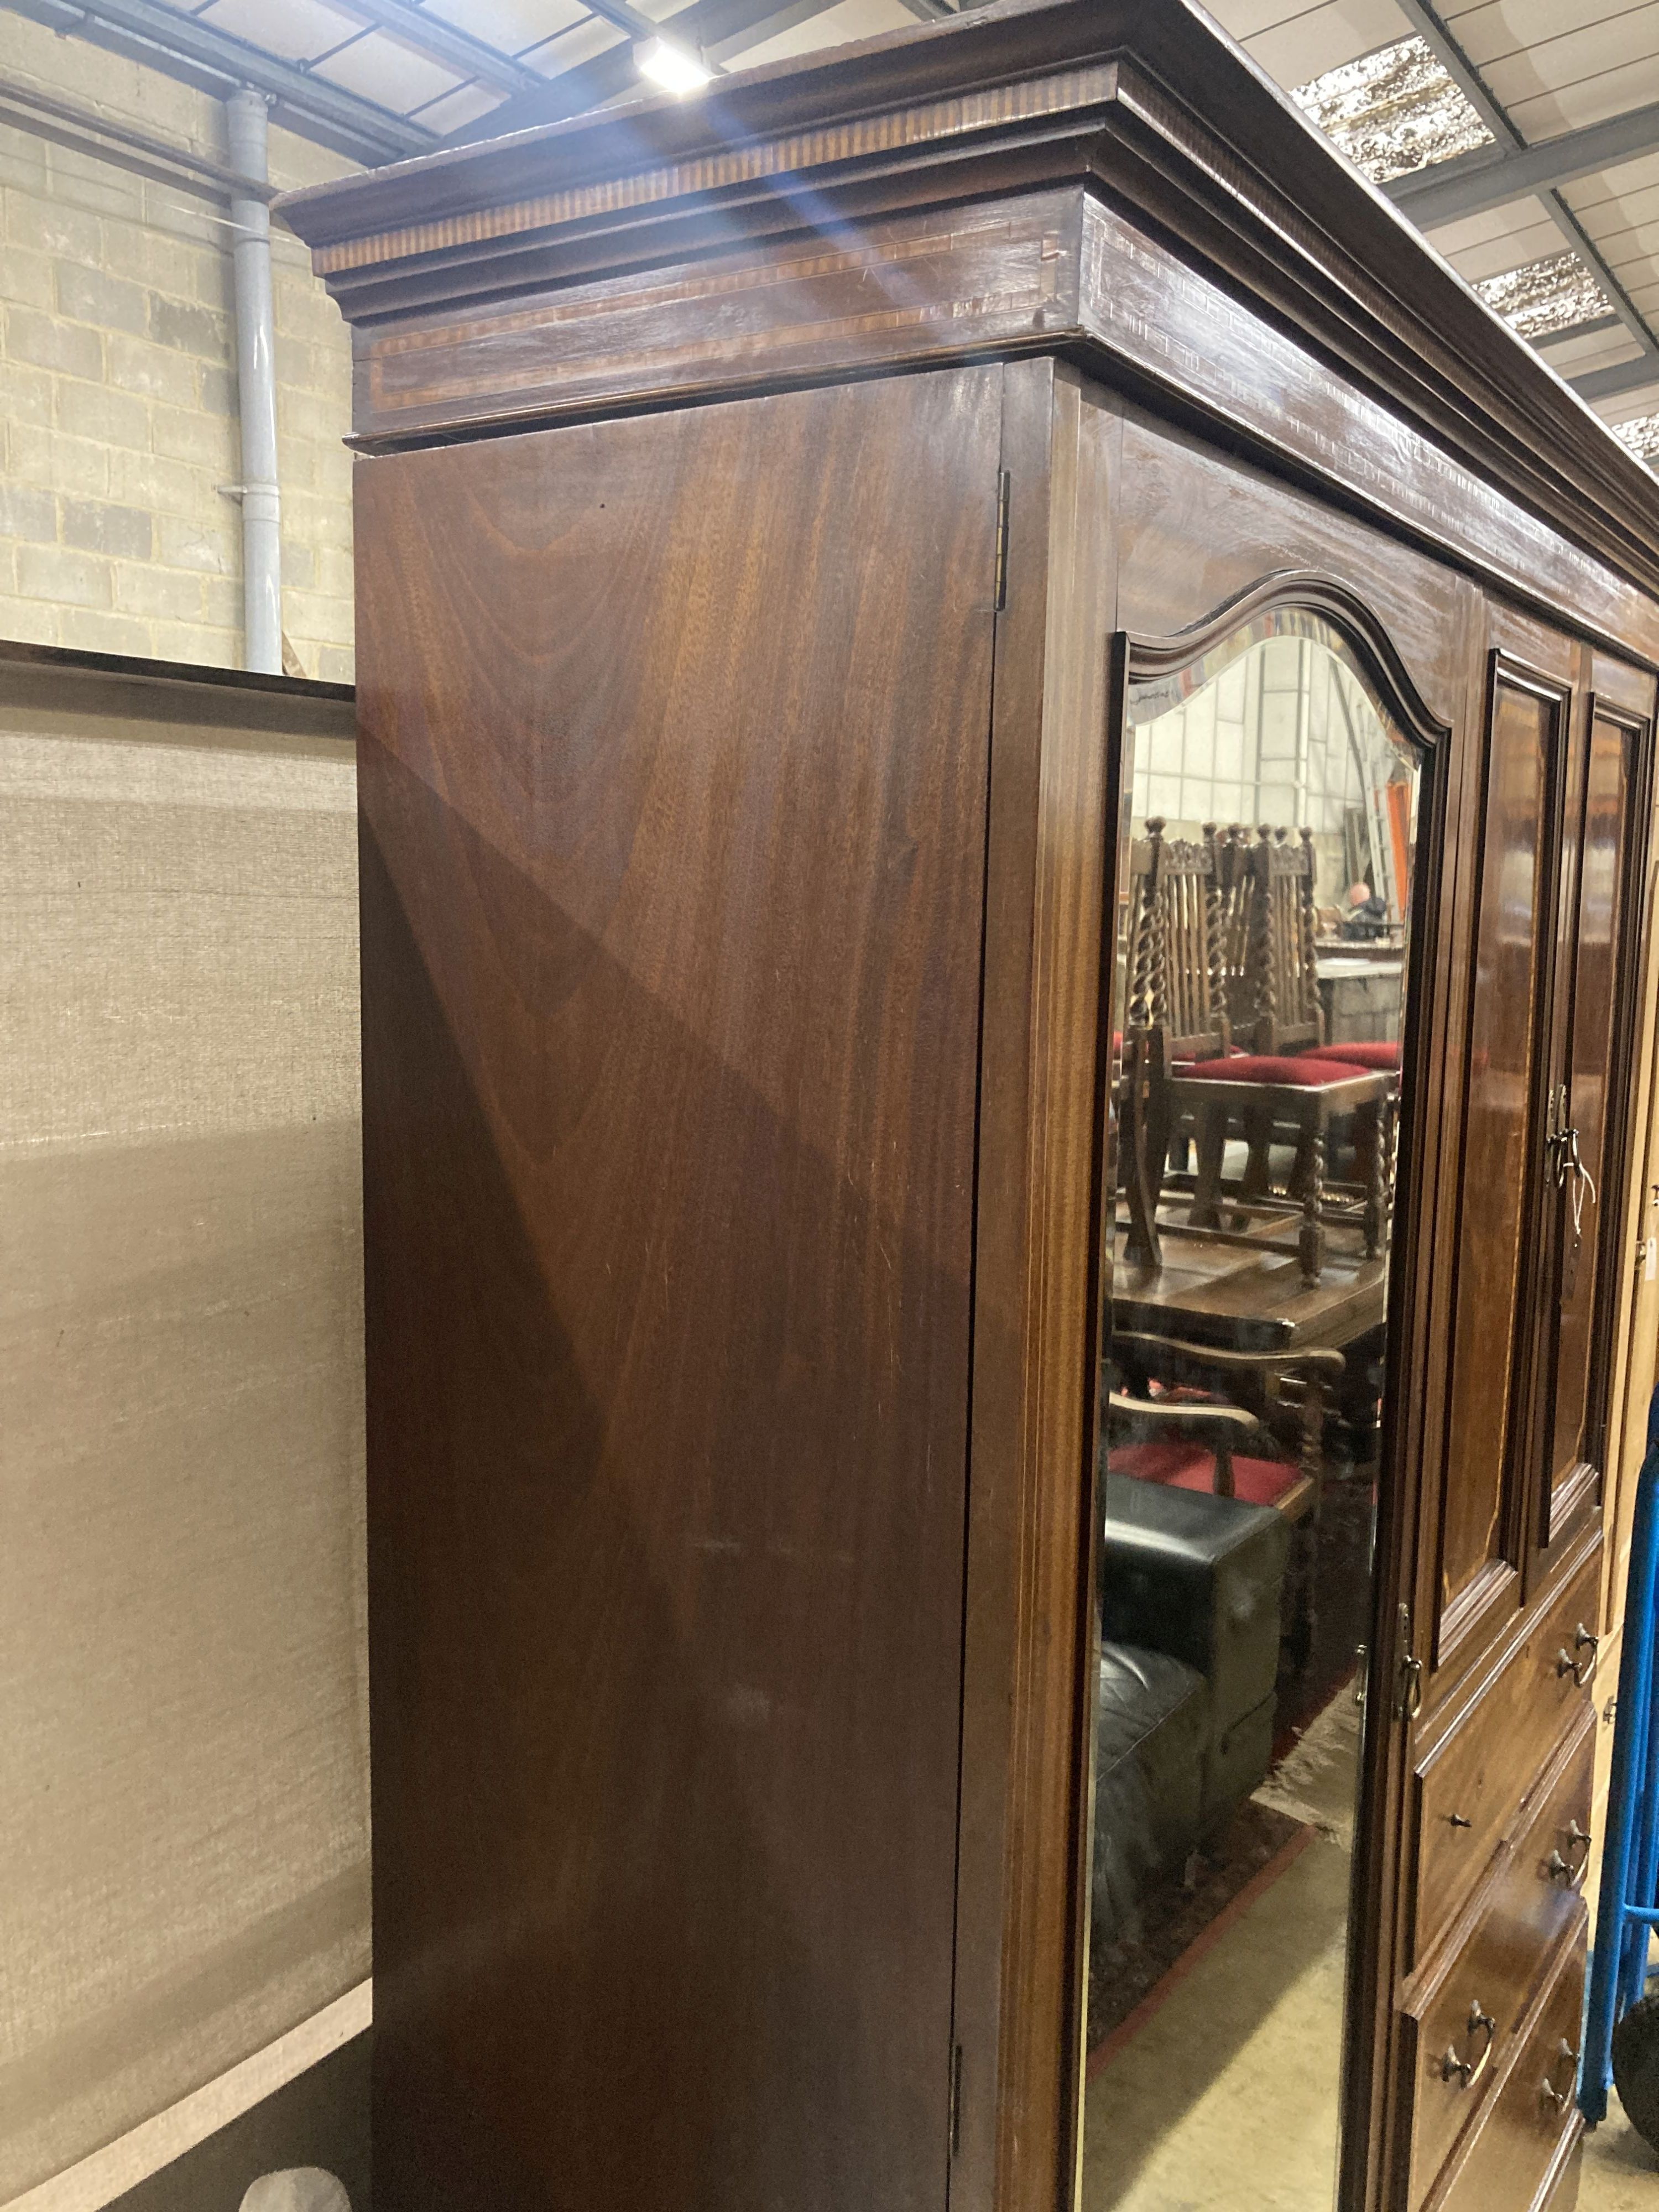 An Edwardian satinwood banded mahogany wardrobe, width 160cm, depth 56cm, height 206cm